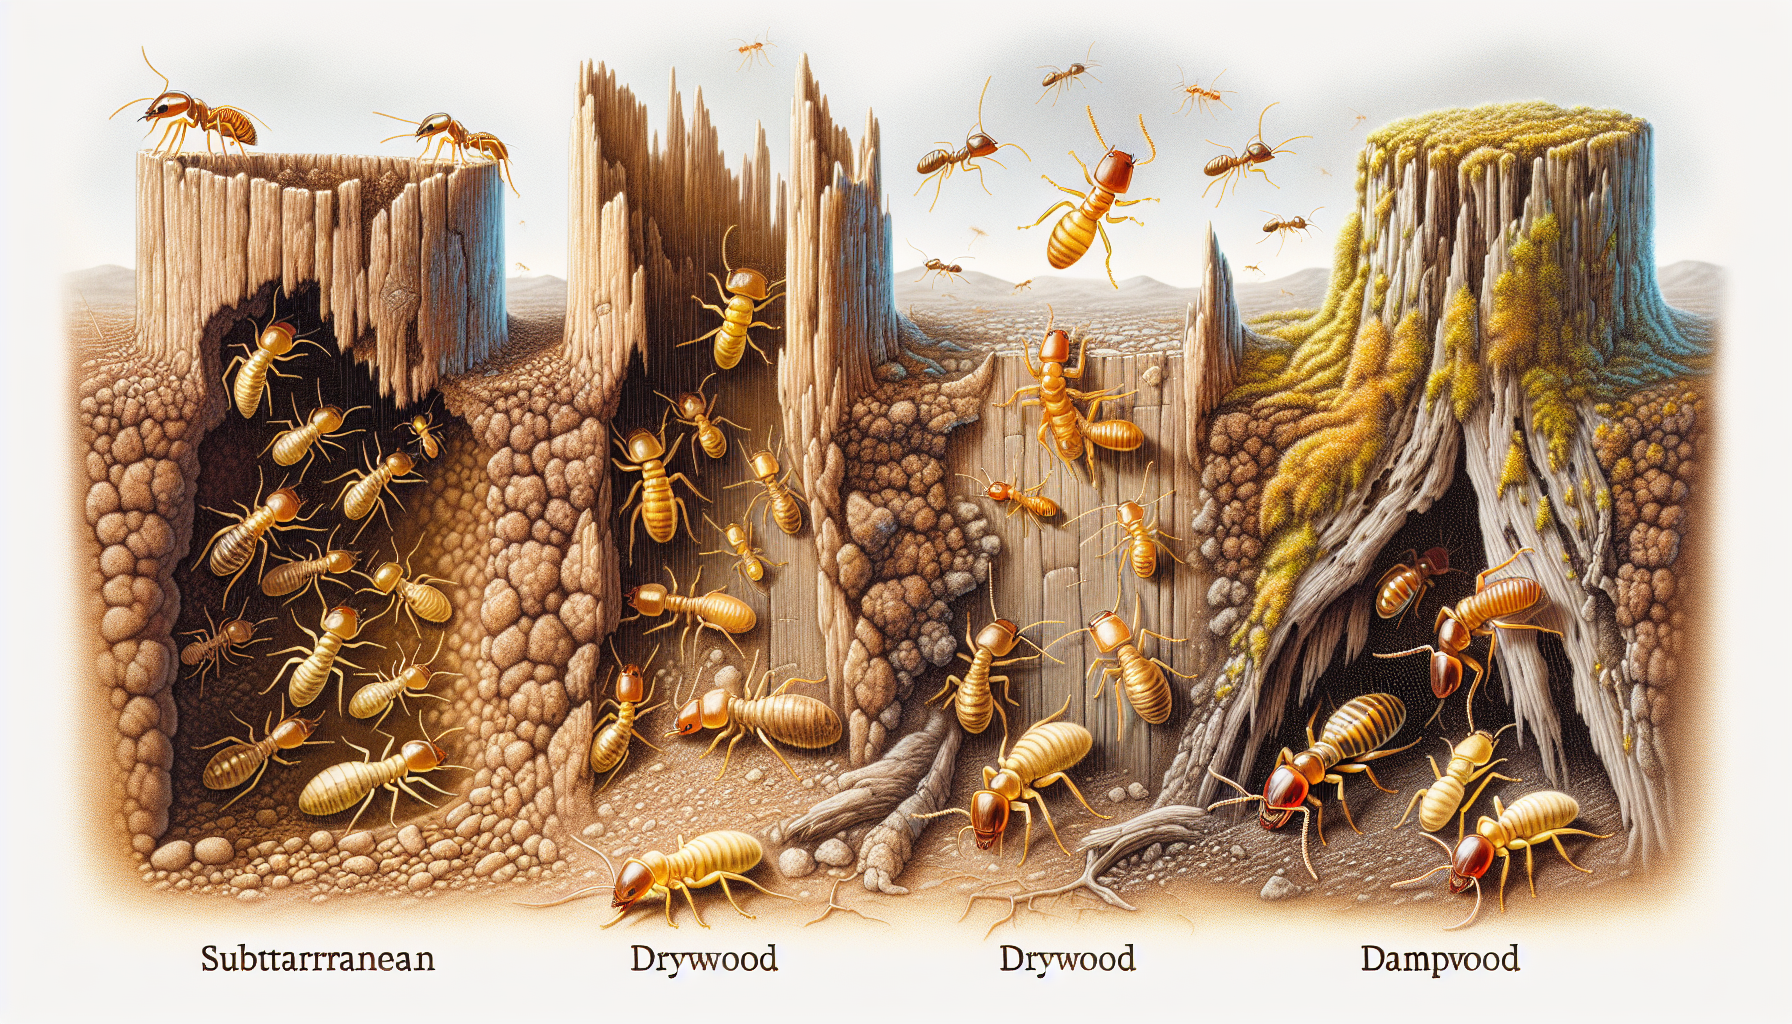 Illustration of different termite species swarming